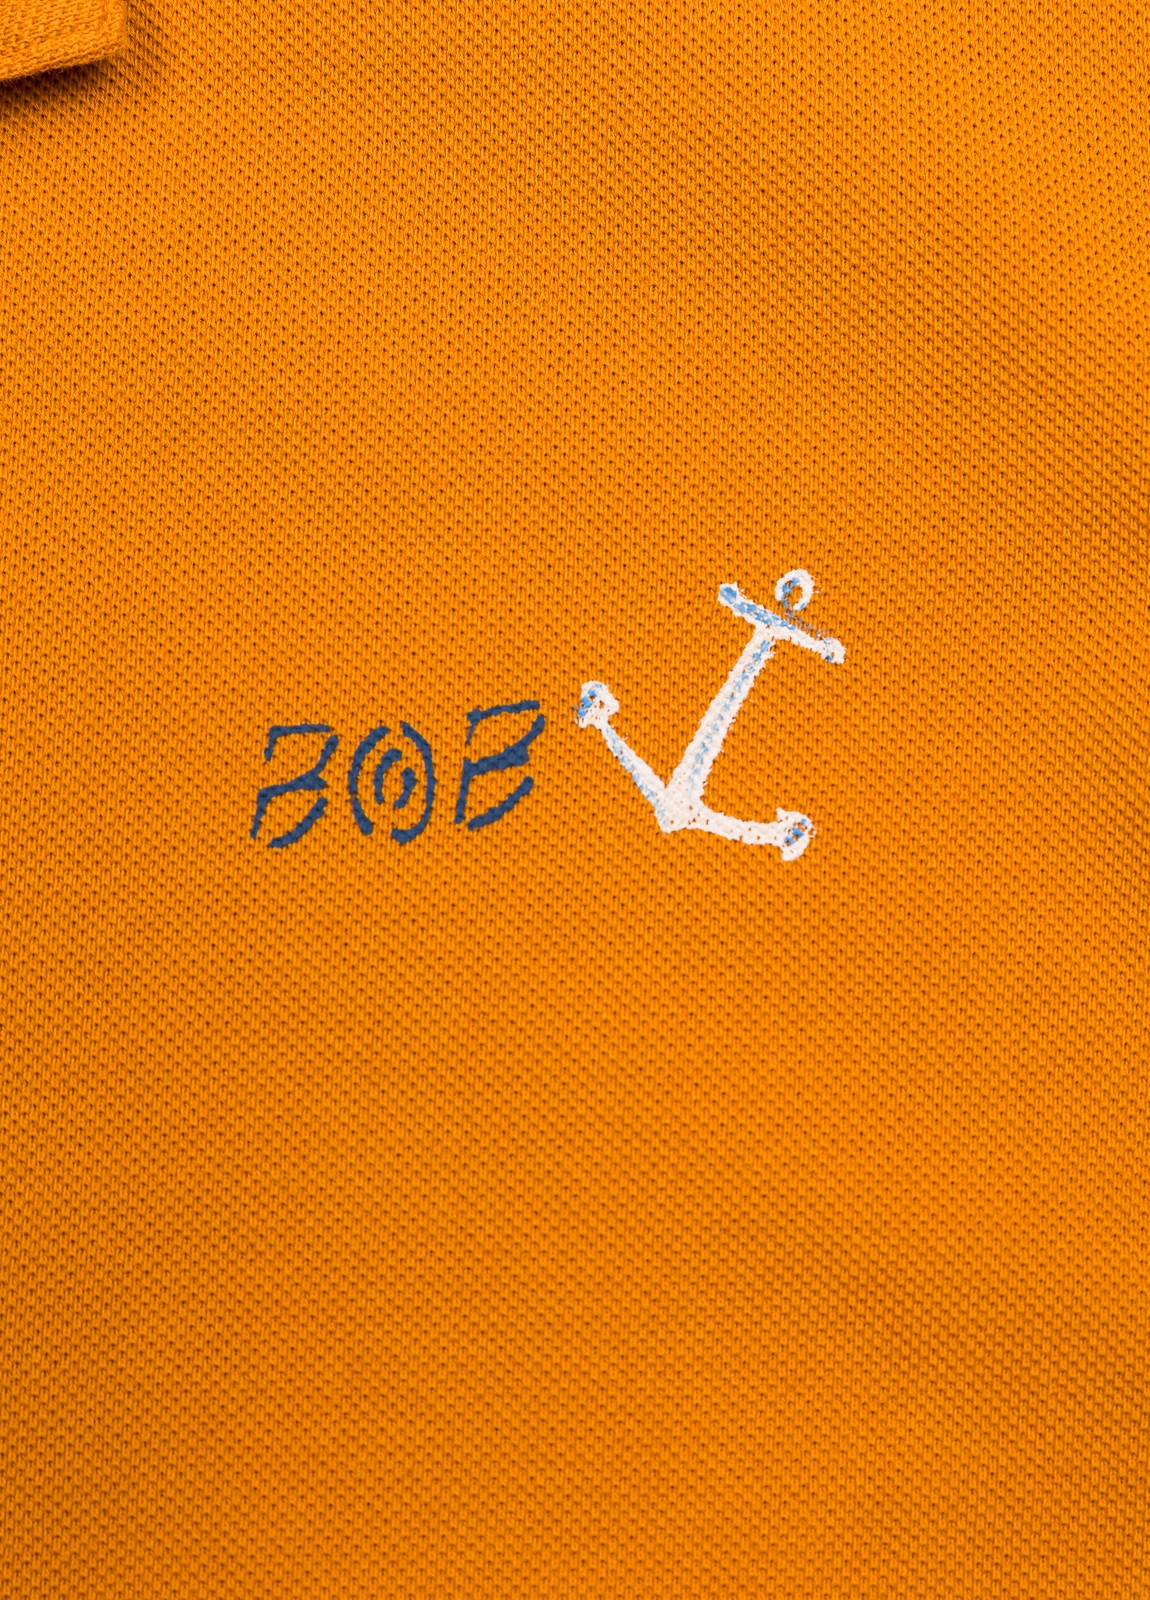 Polo BOB manga corta naranja con dibujo en espalda - Ítem9